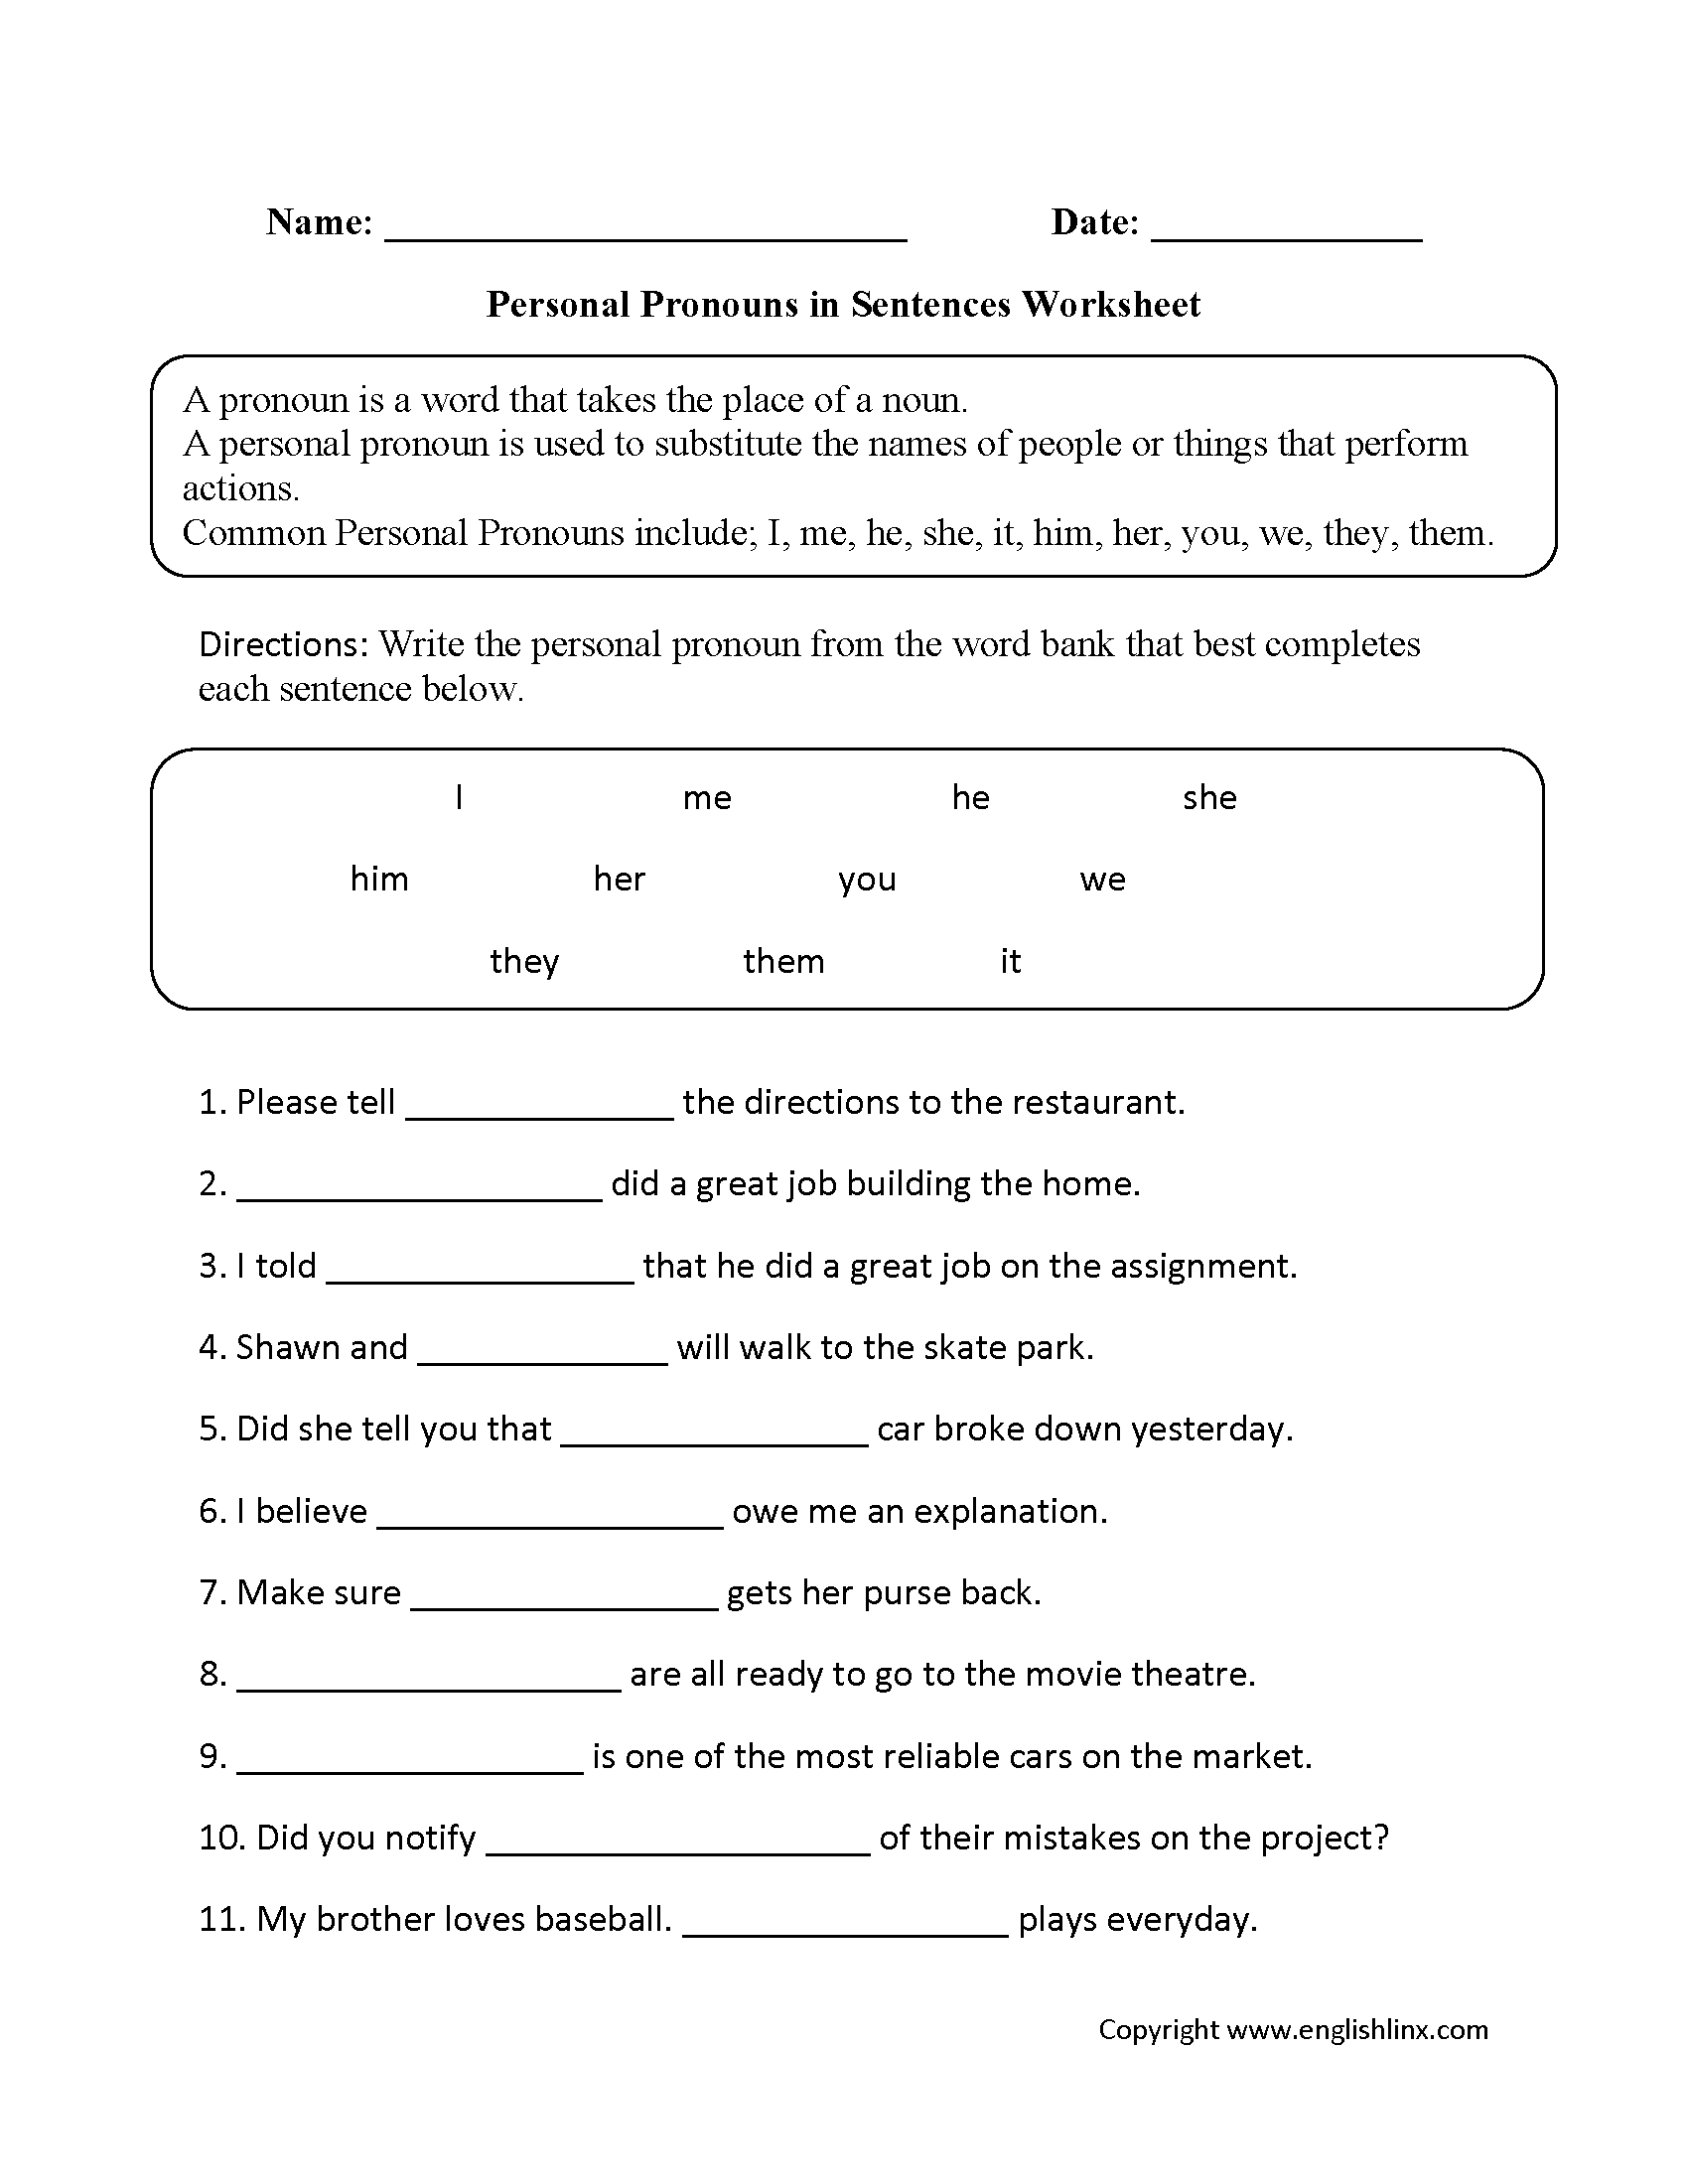 Personal Pronoun Worksheets For 6th Grade - personal pronouns